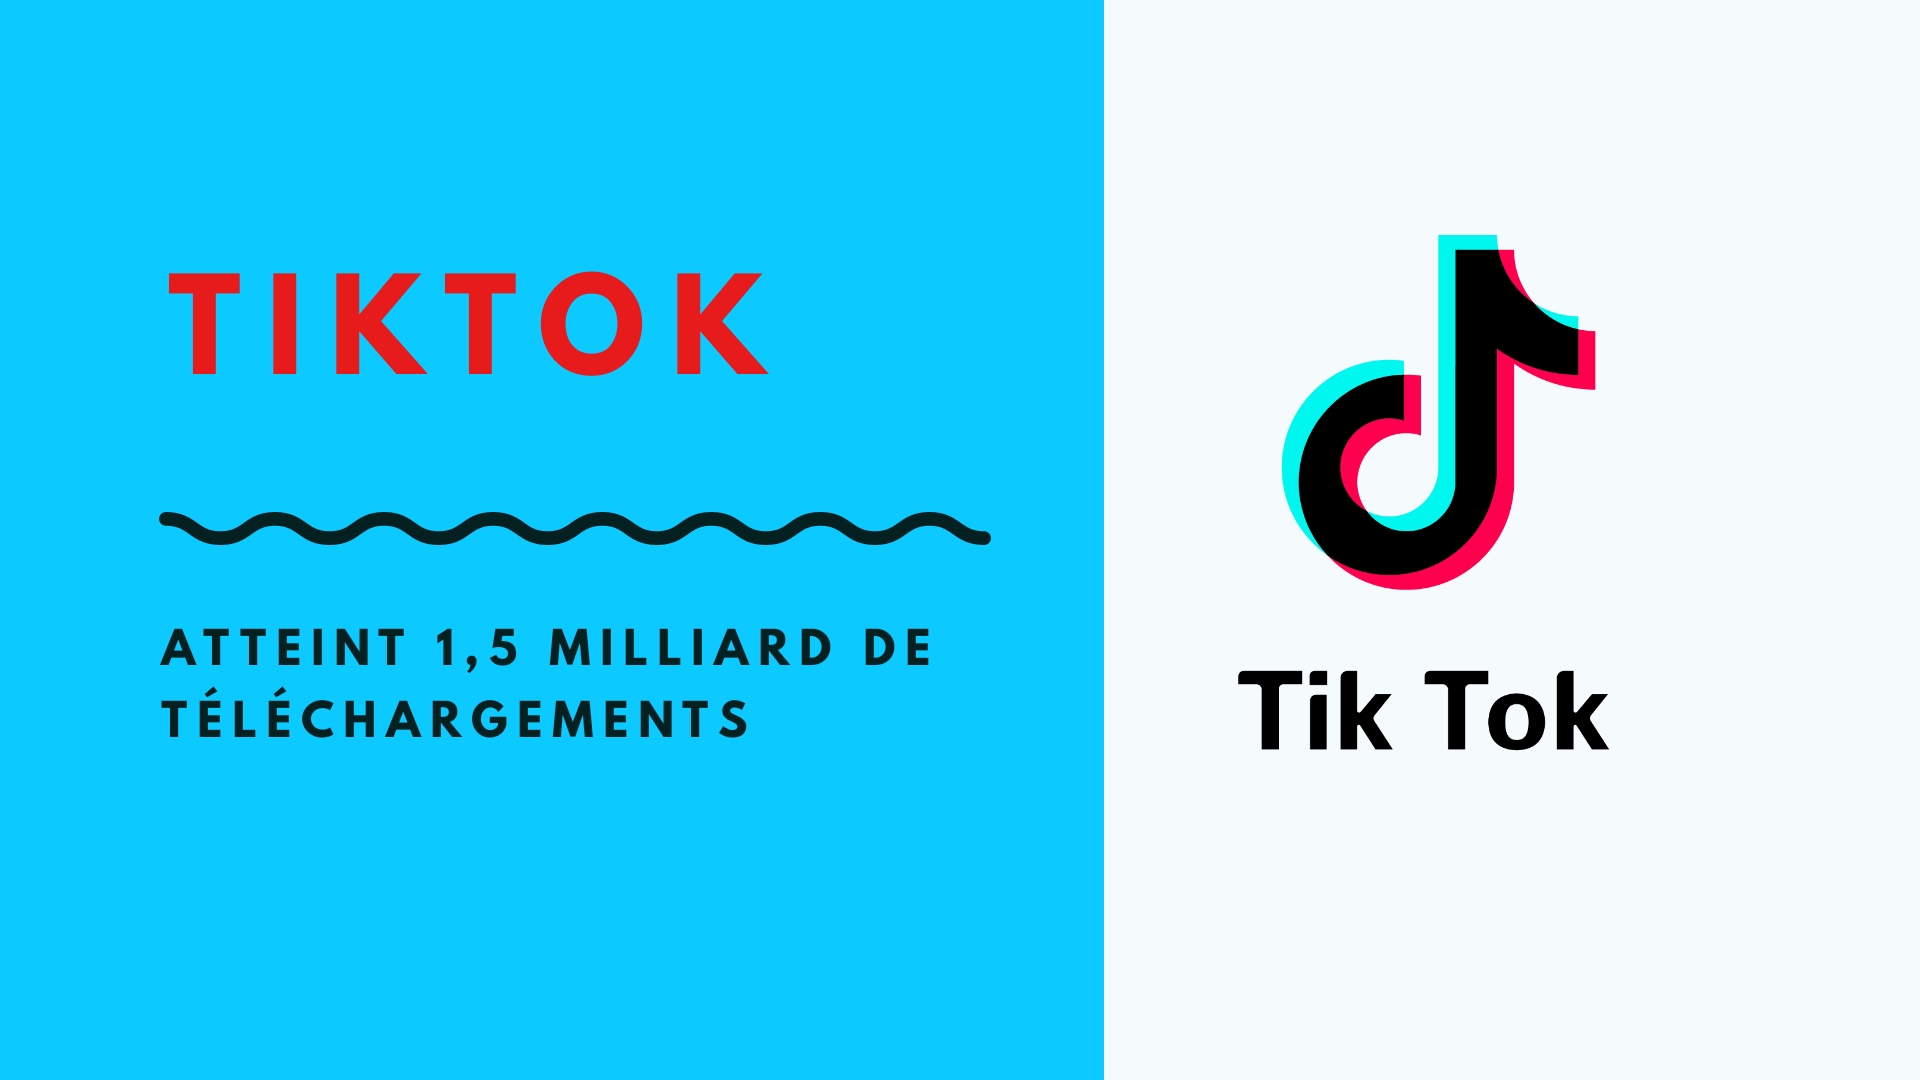  TikTok atteint 1,5 milliard de téléchargements 😱